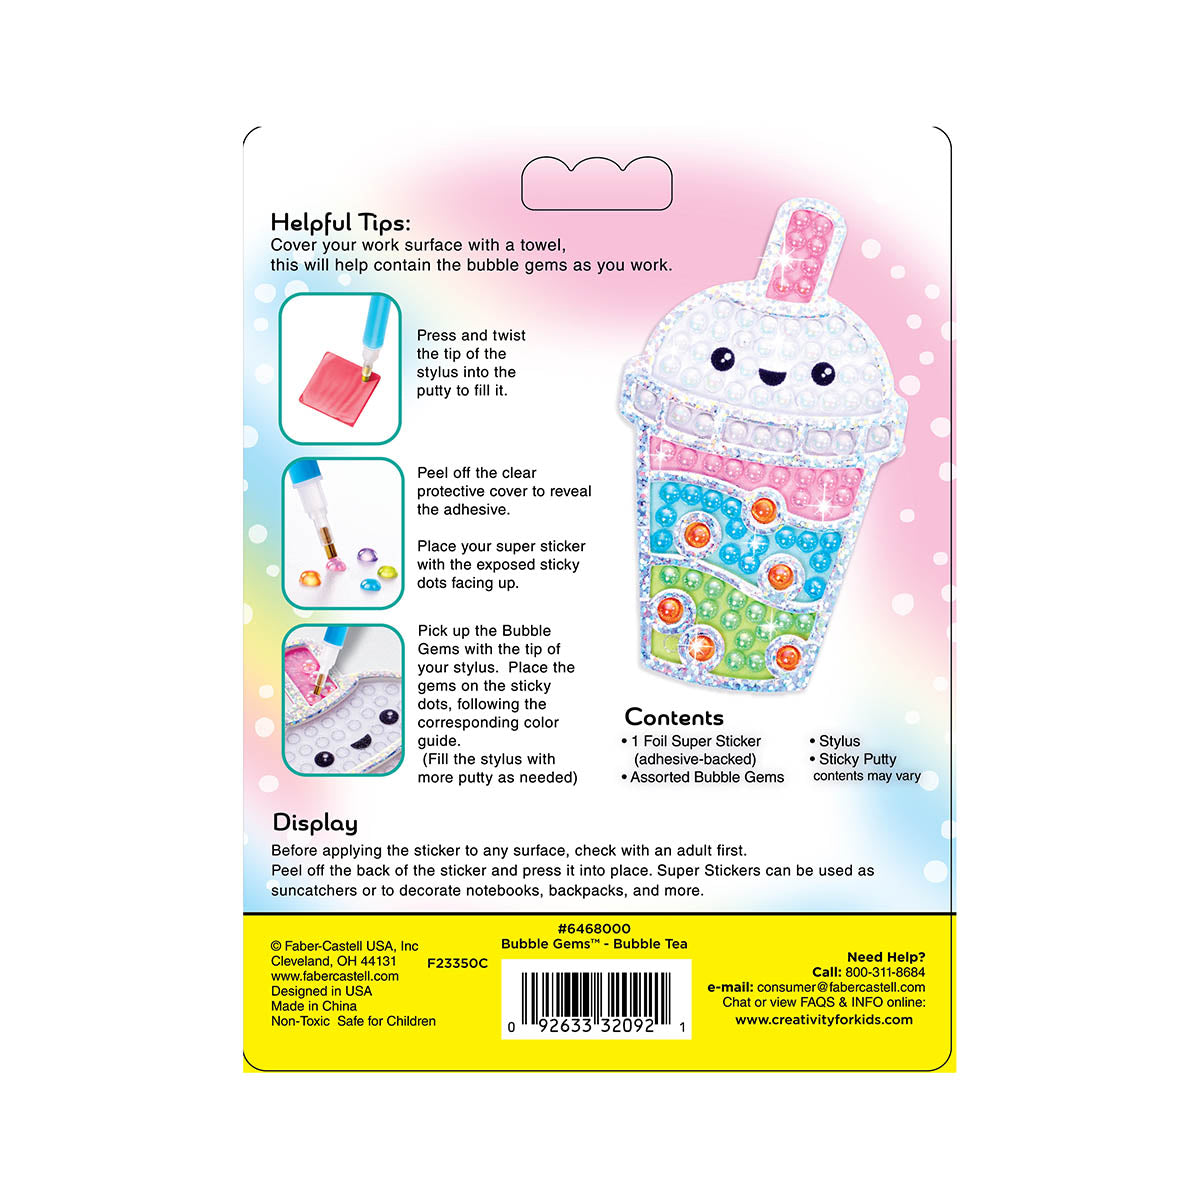 Bubble Tea Bubble Gems Super Sticker by Creativity for Kids.